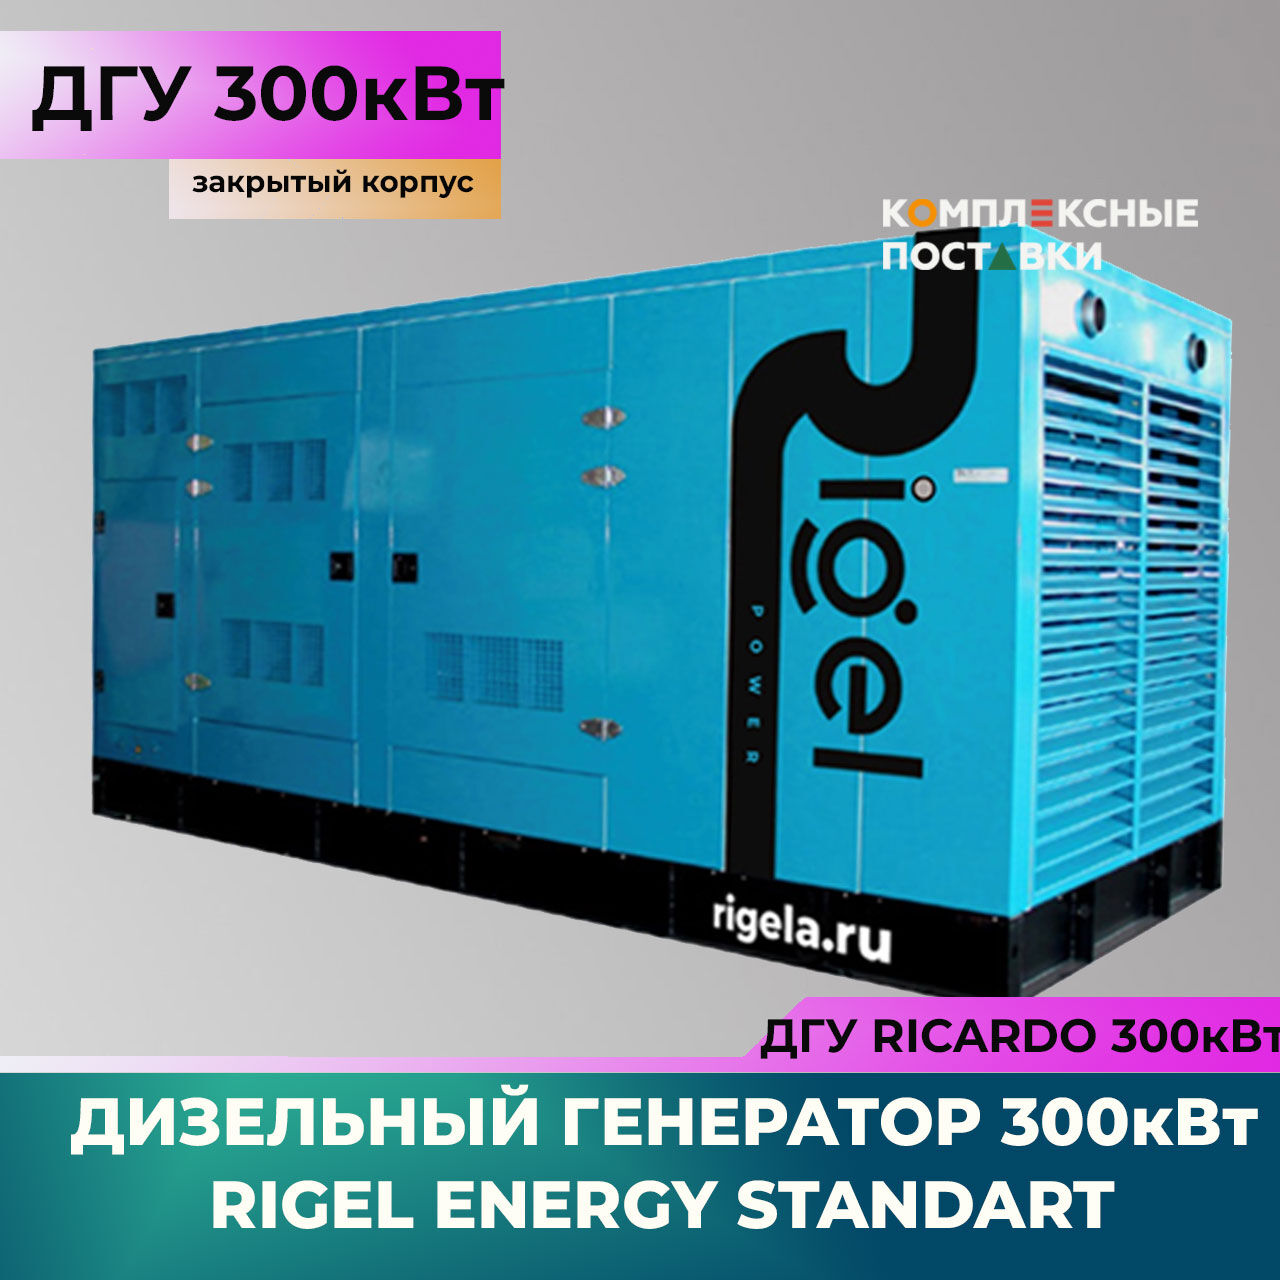 ДГУ 300кВт Ricardo R Дизель-генератор Rigel Energy Standard RES 300 (300 кВт, Ricardo R) закрытый